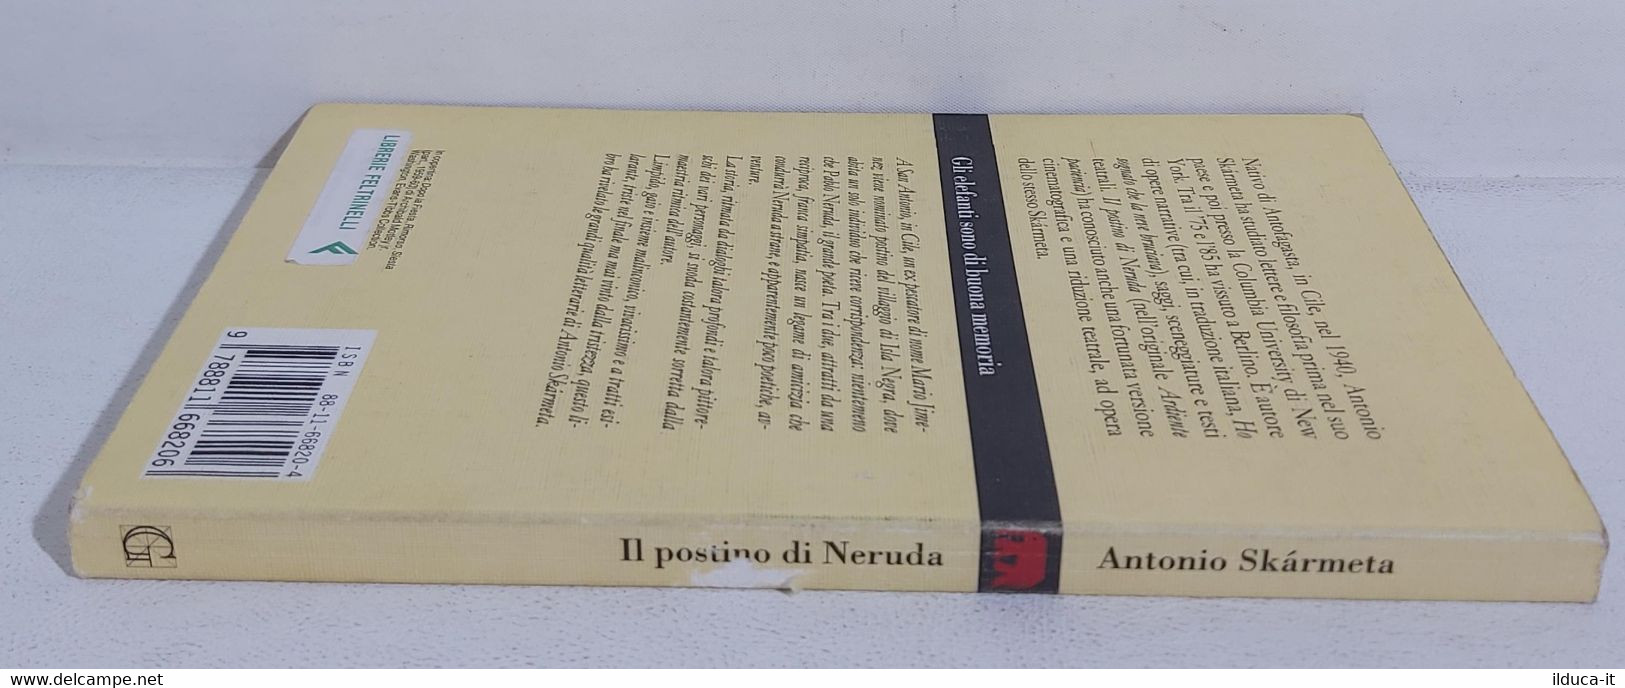 I106604 Antonio Skarmeta - Il Postino Di Neruda - Garzanti 1994 - Erzählungen, Kurzgeschichten